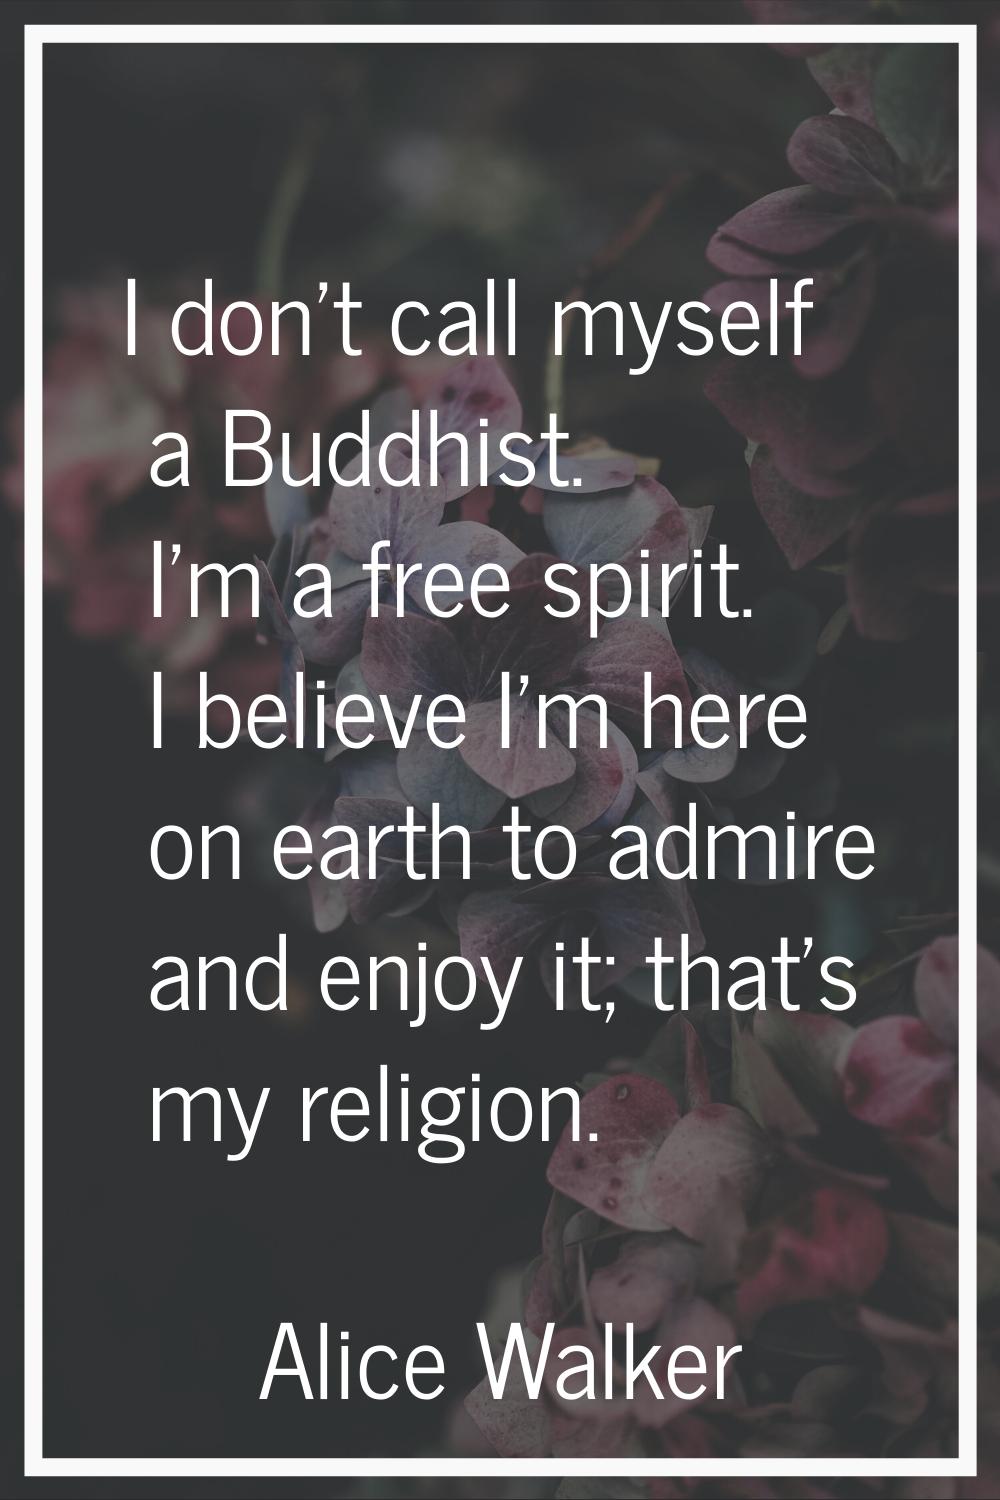 I don't call myself a Buddhist. I'm a free spirit. I believe I'm here on earth to admire and enjoy 